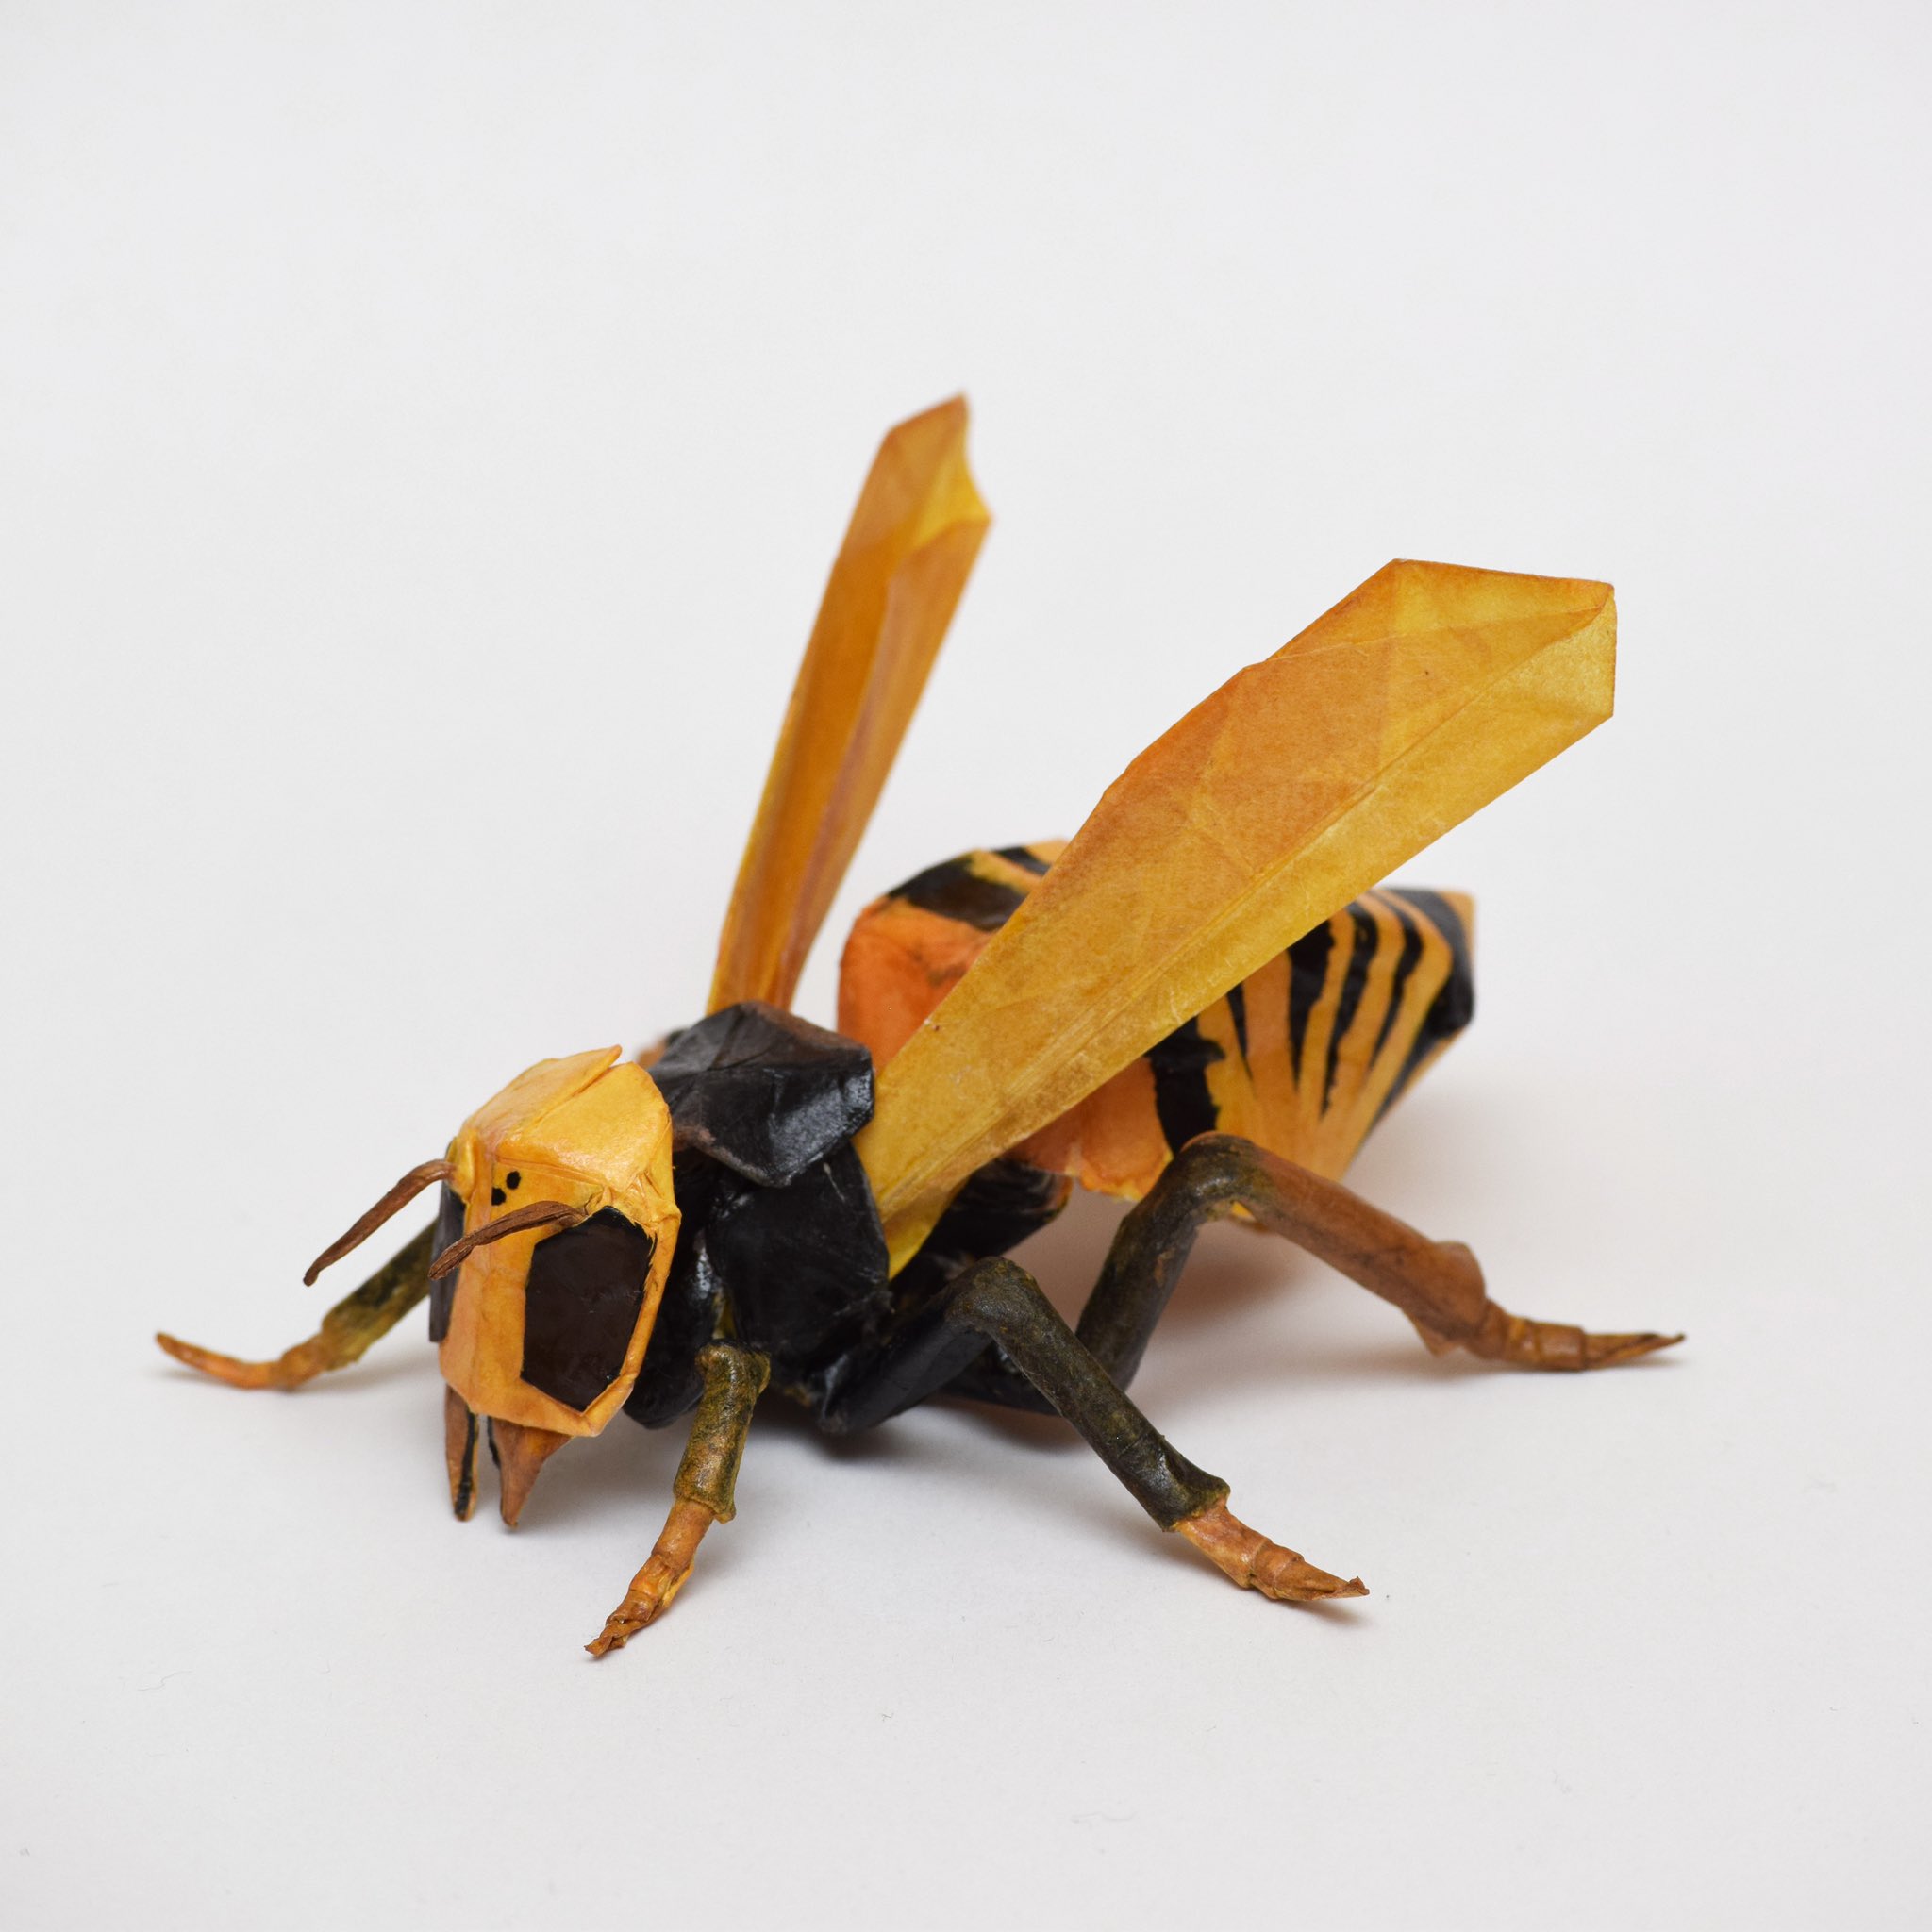 Kal スズメバチ Wasp 不切正方形一枚折り 折り上げた後に塗装とコーティングをしています 翅に蝋引き加工を施してみました 初めての昆虫創作 折り紙 折り紙作品 Origami